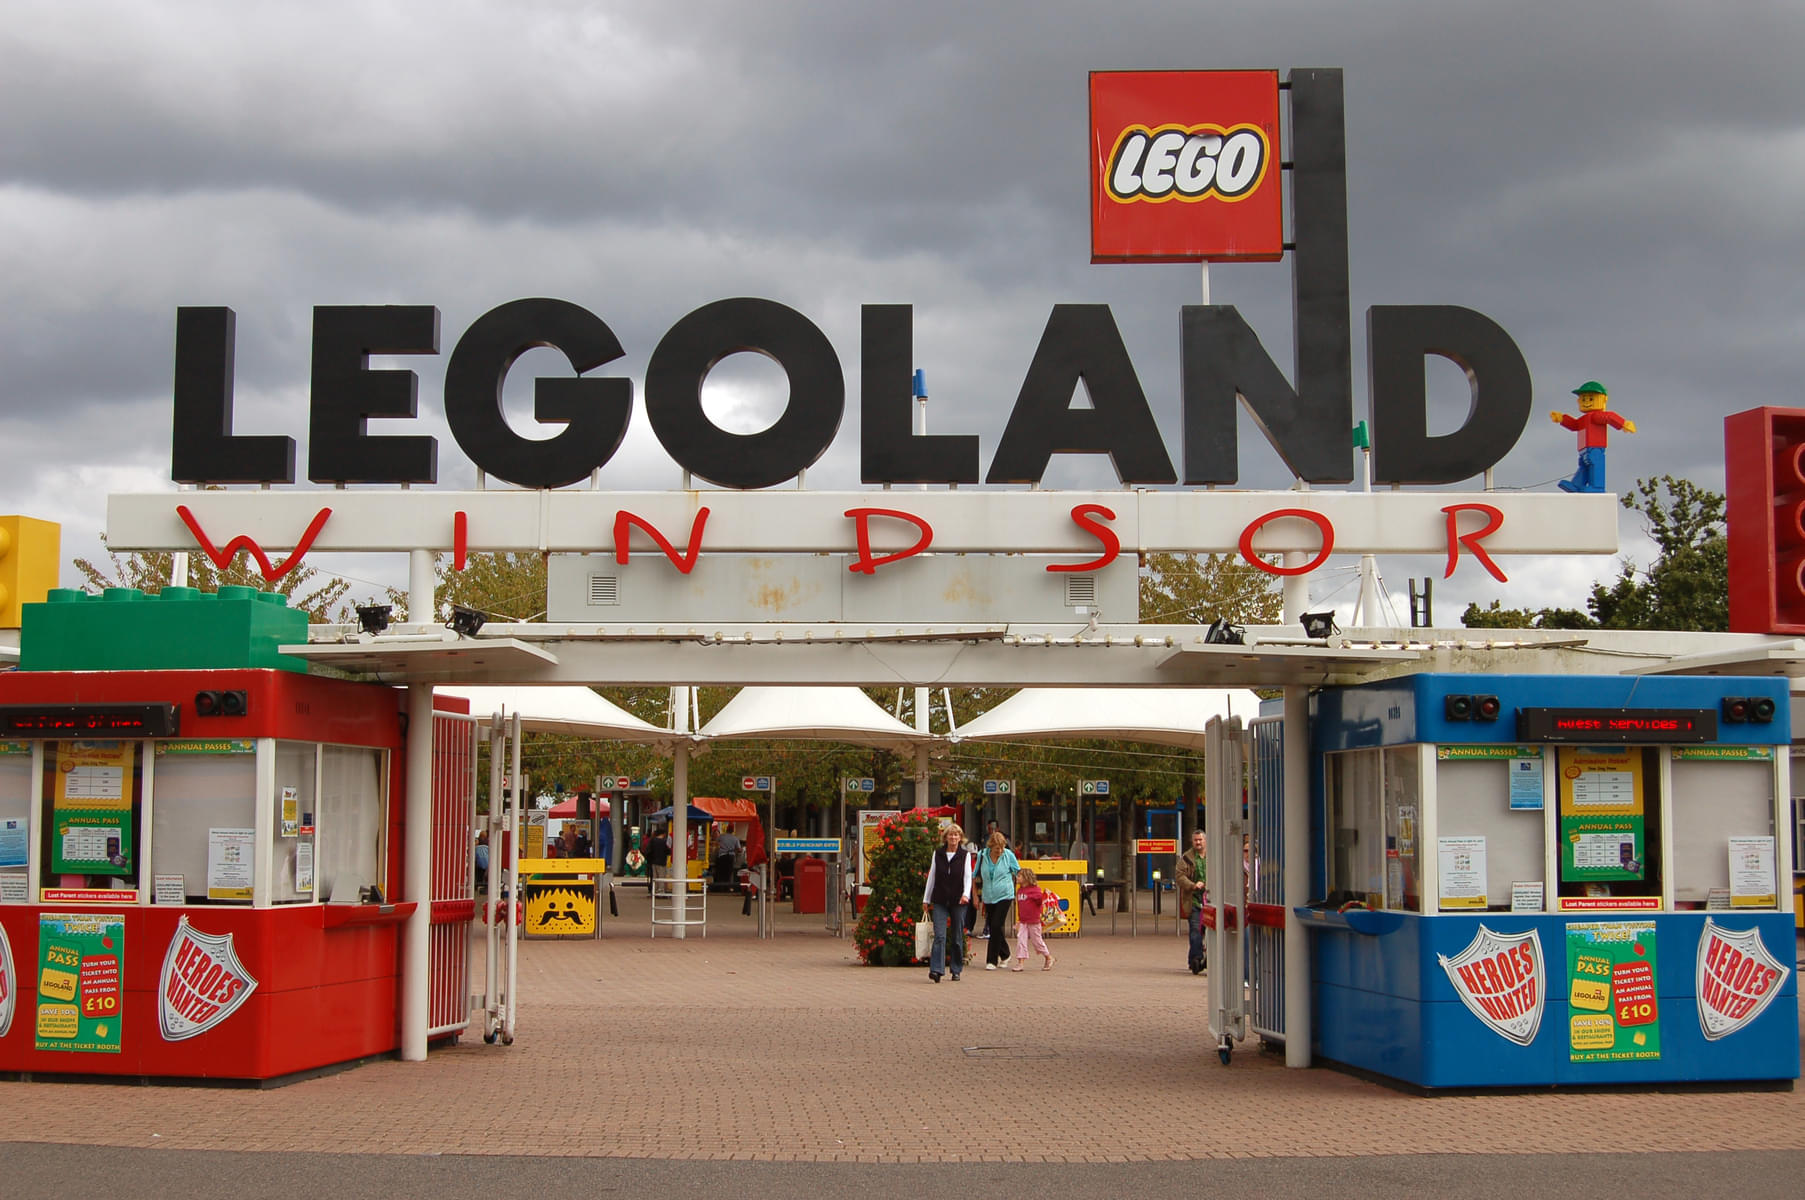 Visit the LEGOLAND Windsor theme park